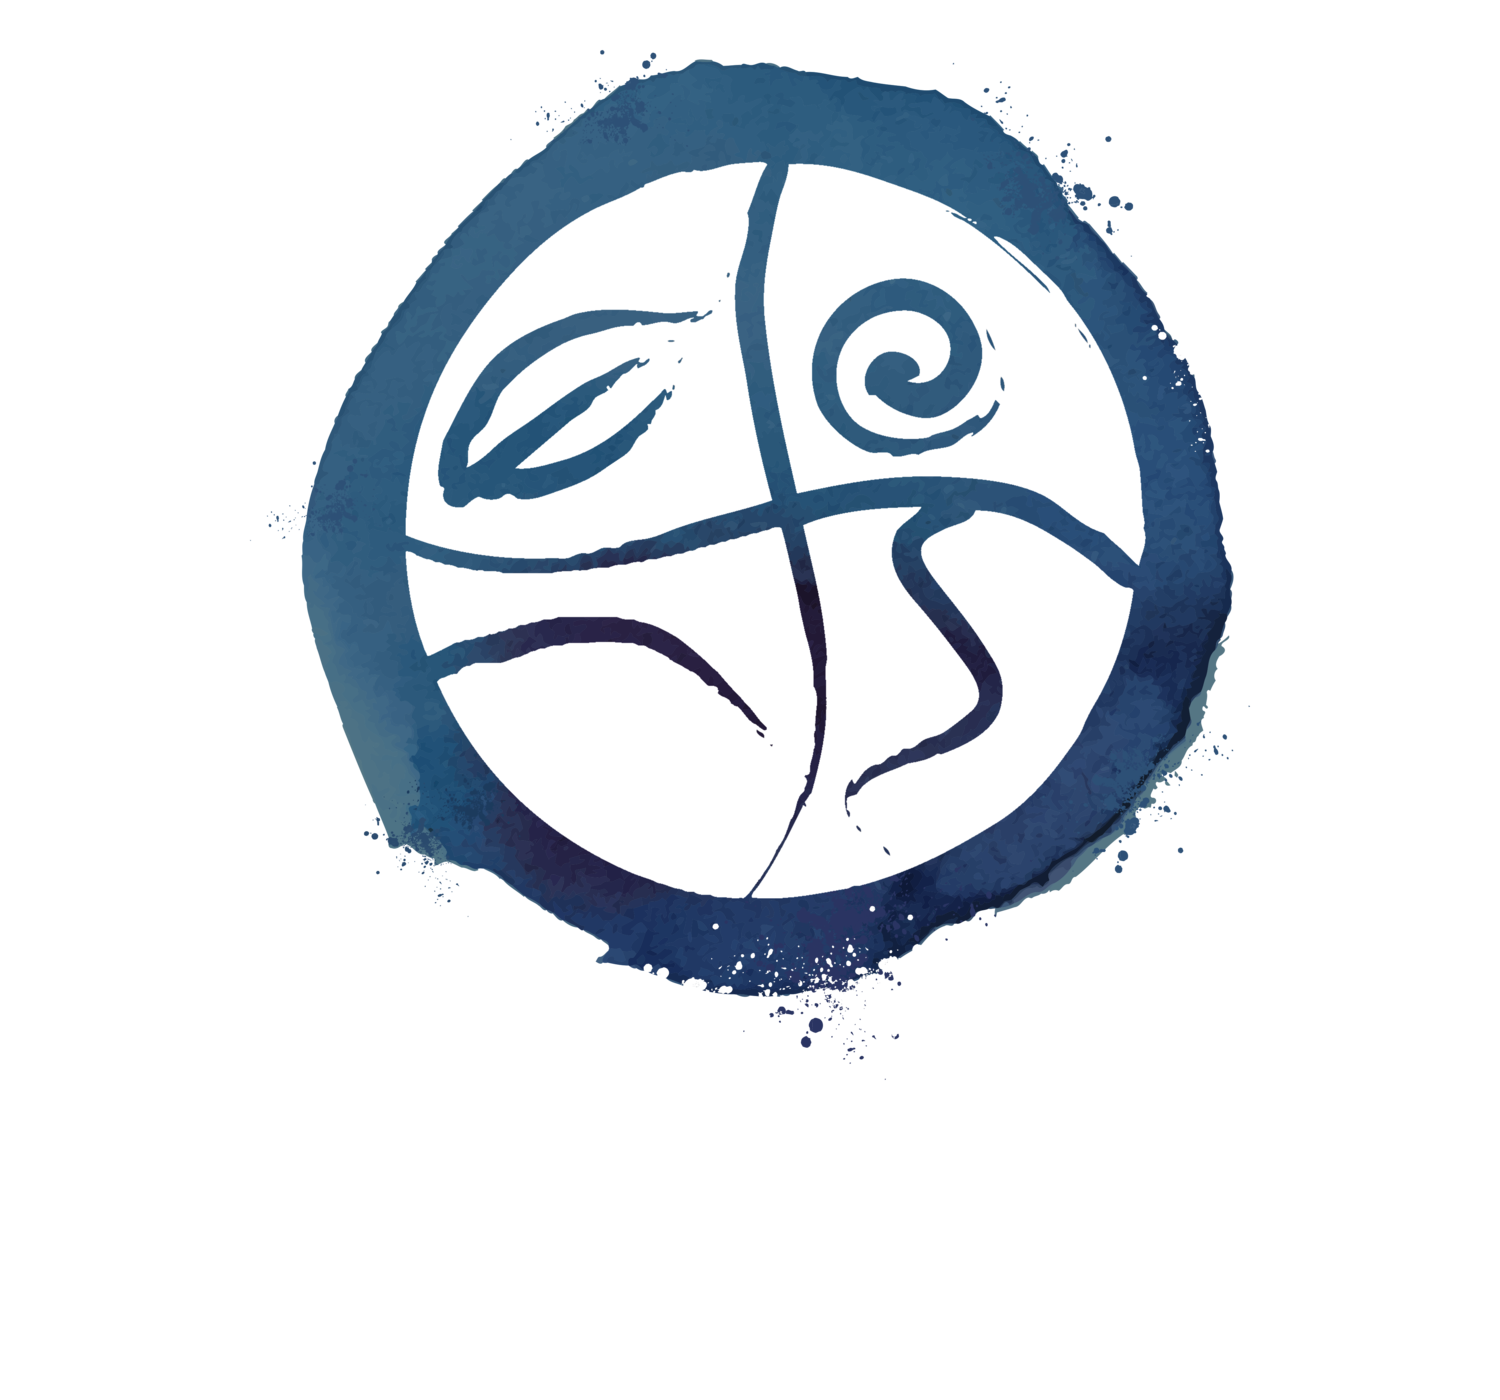 Topanga Mountain School